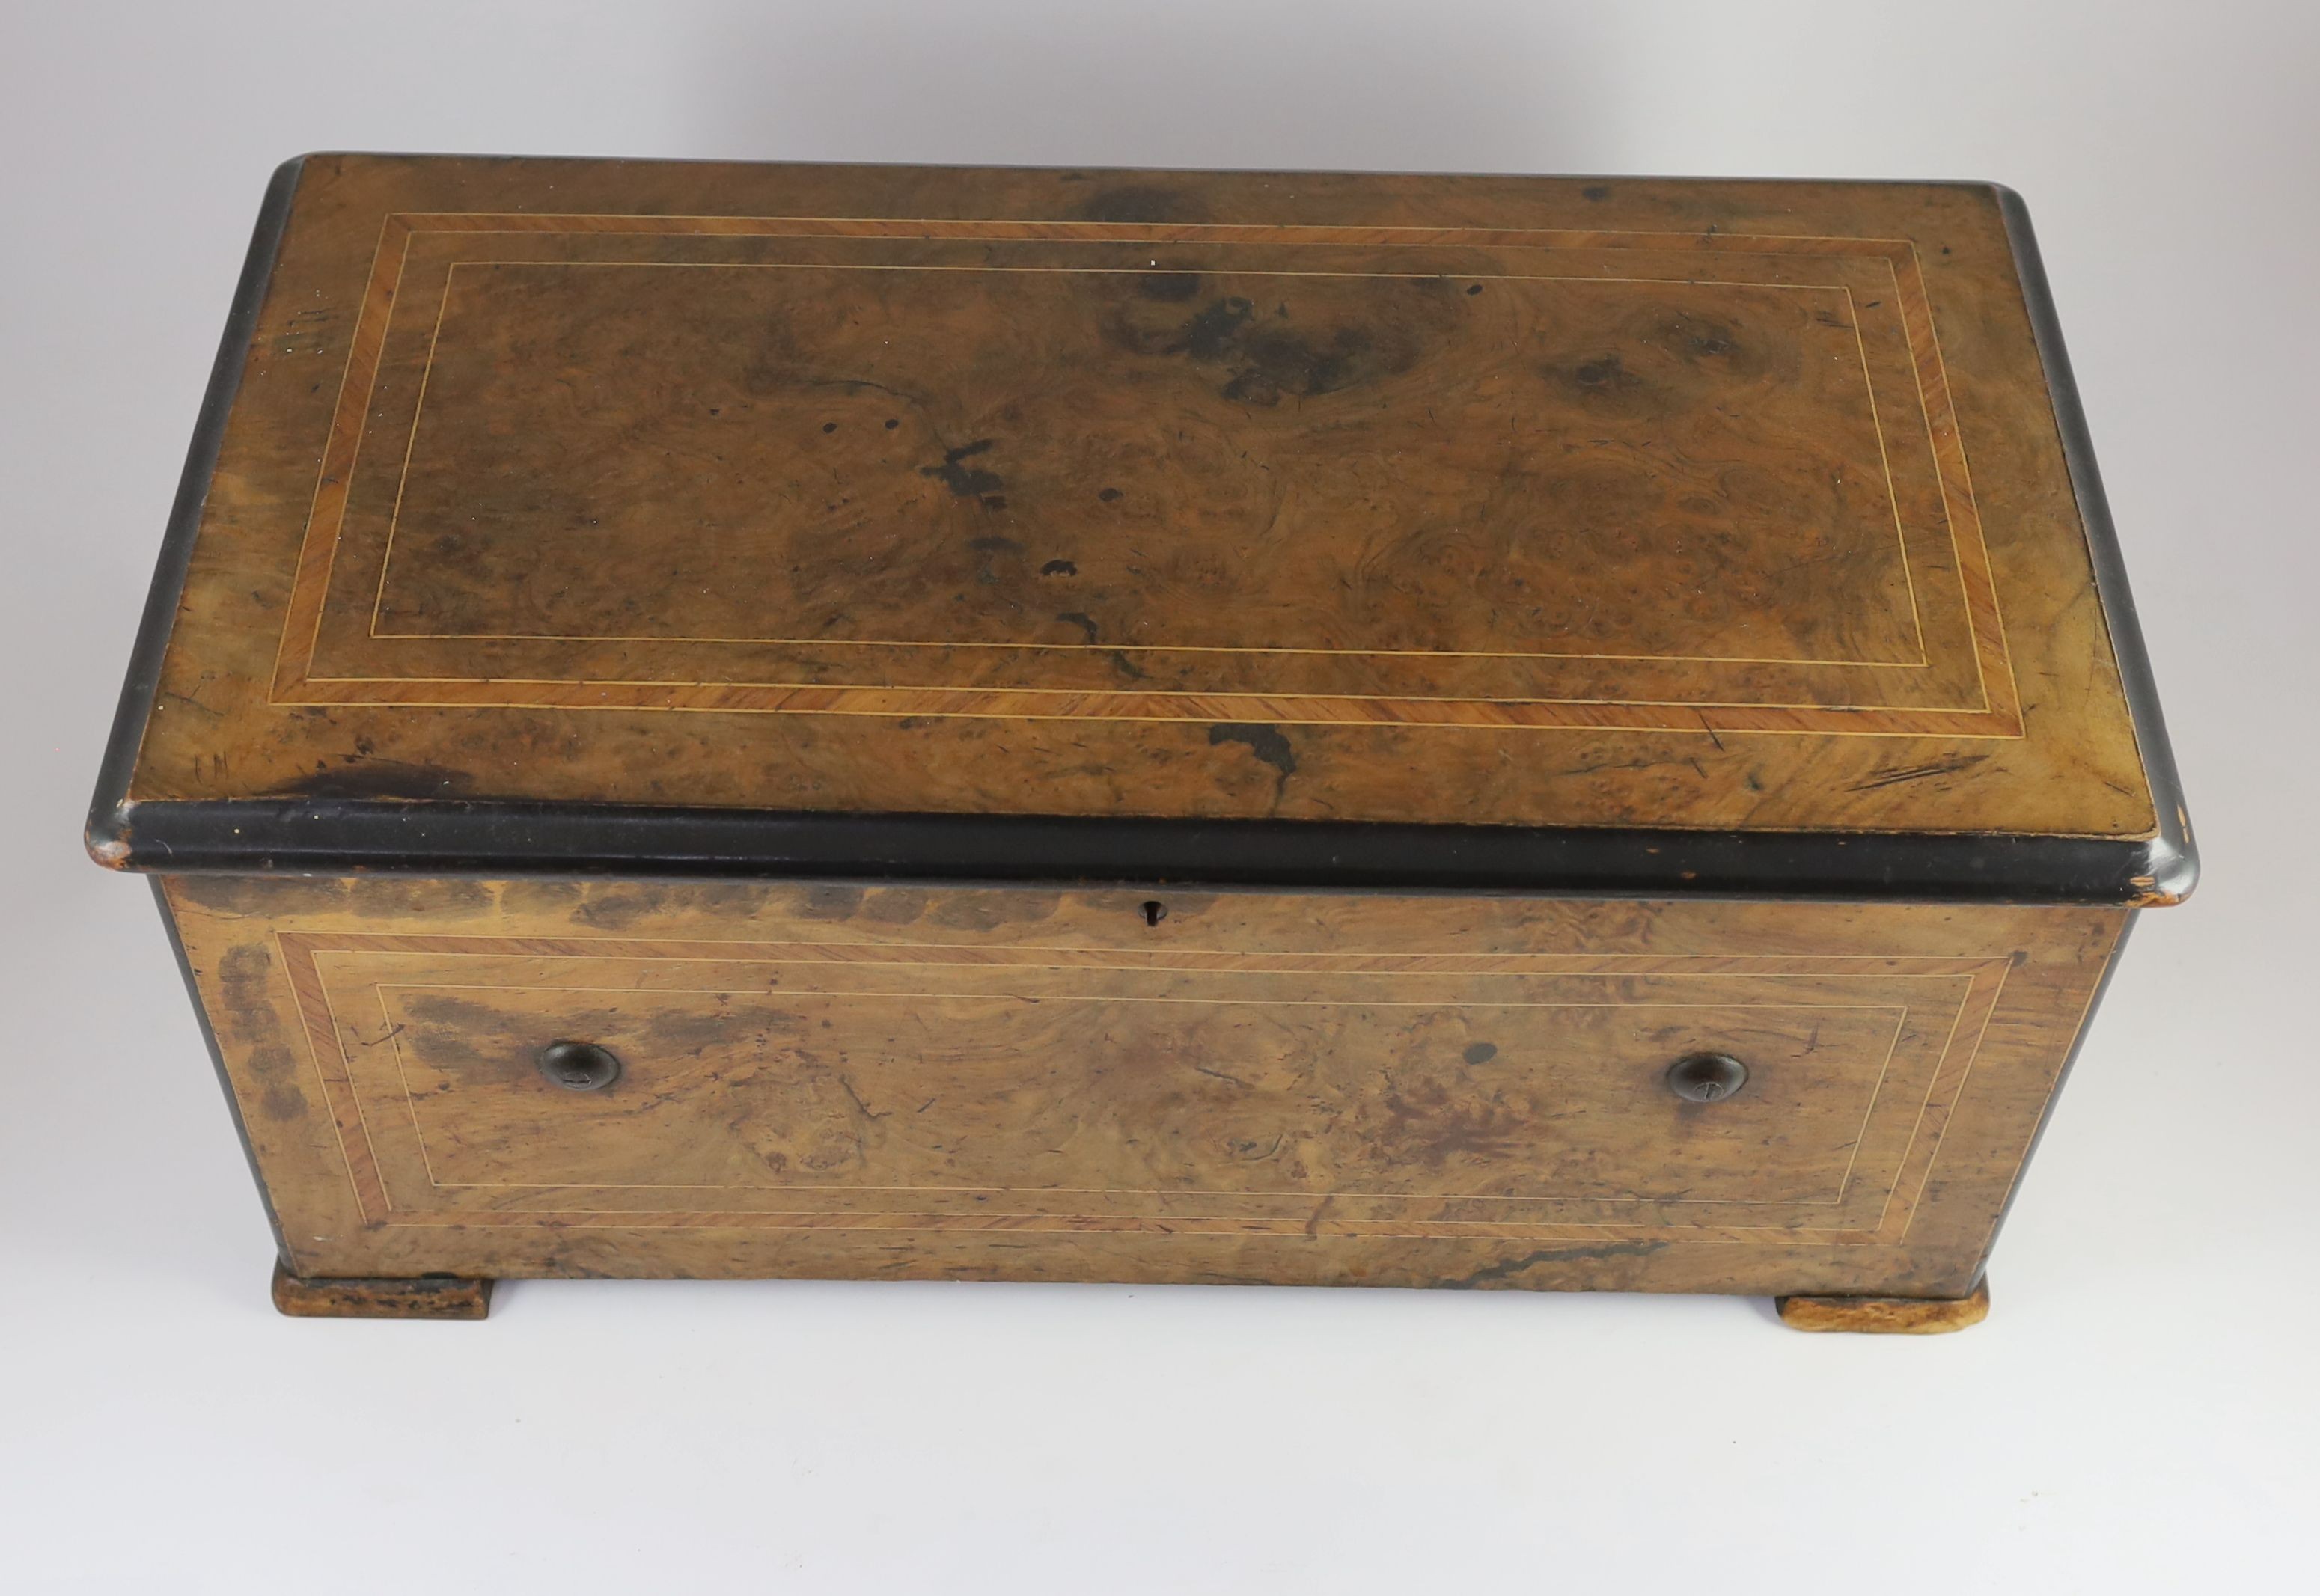 A 19th century Swiss ten air inlaid walnut musical box, width 60cm, depth 31cm, height 26cm